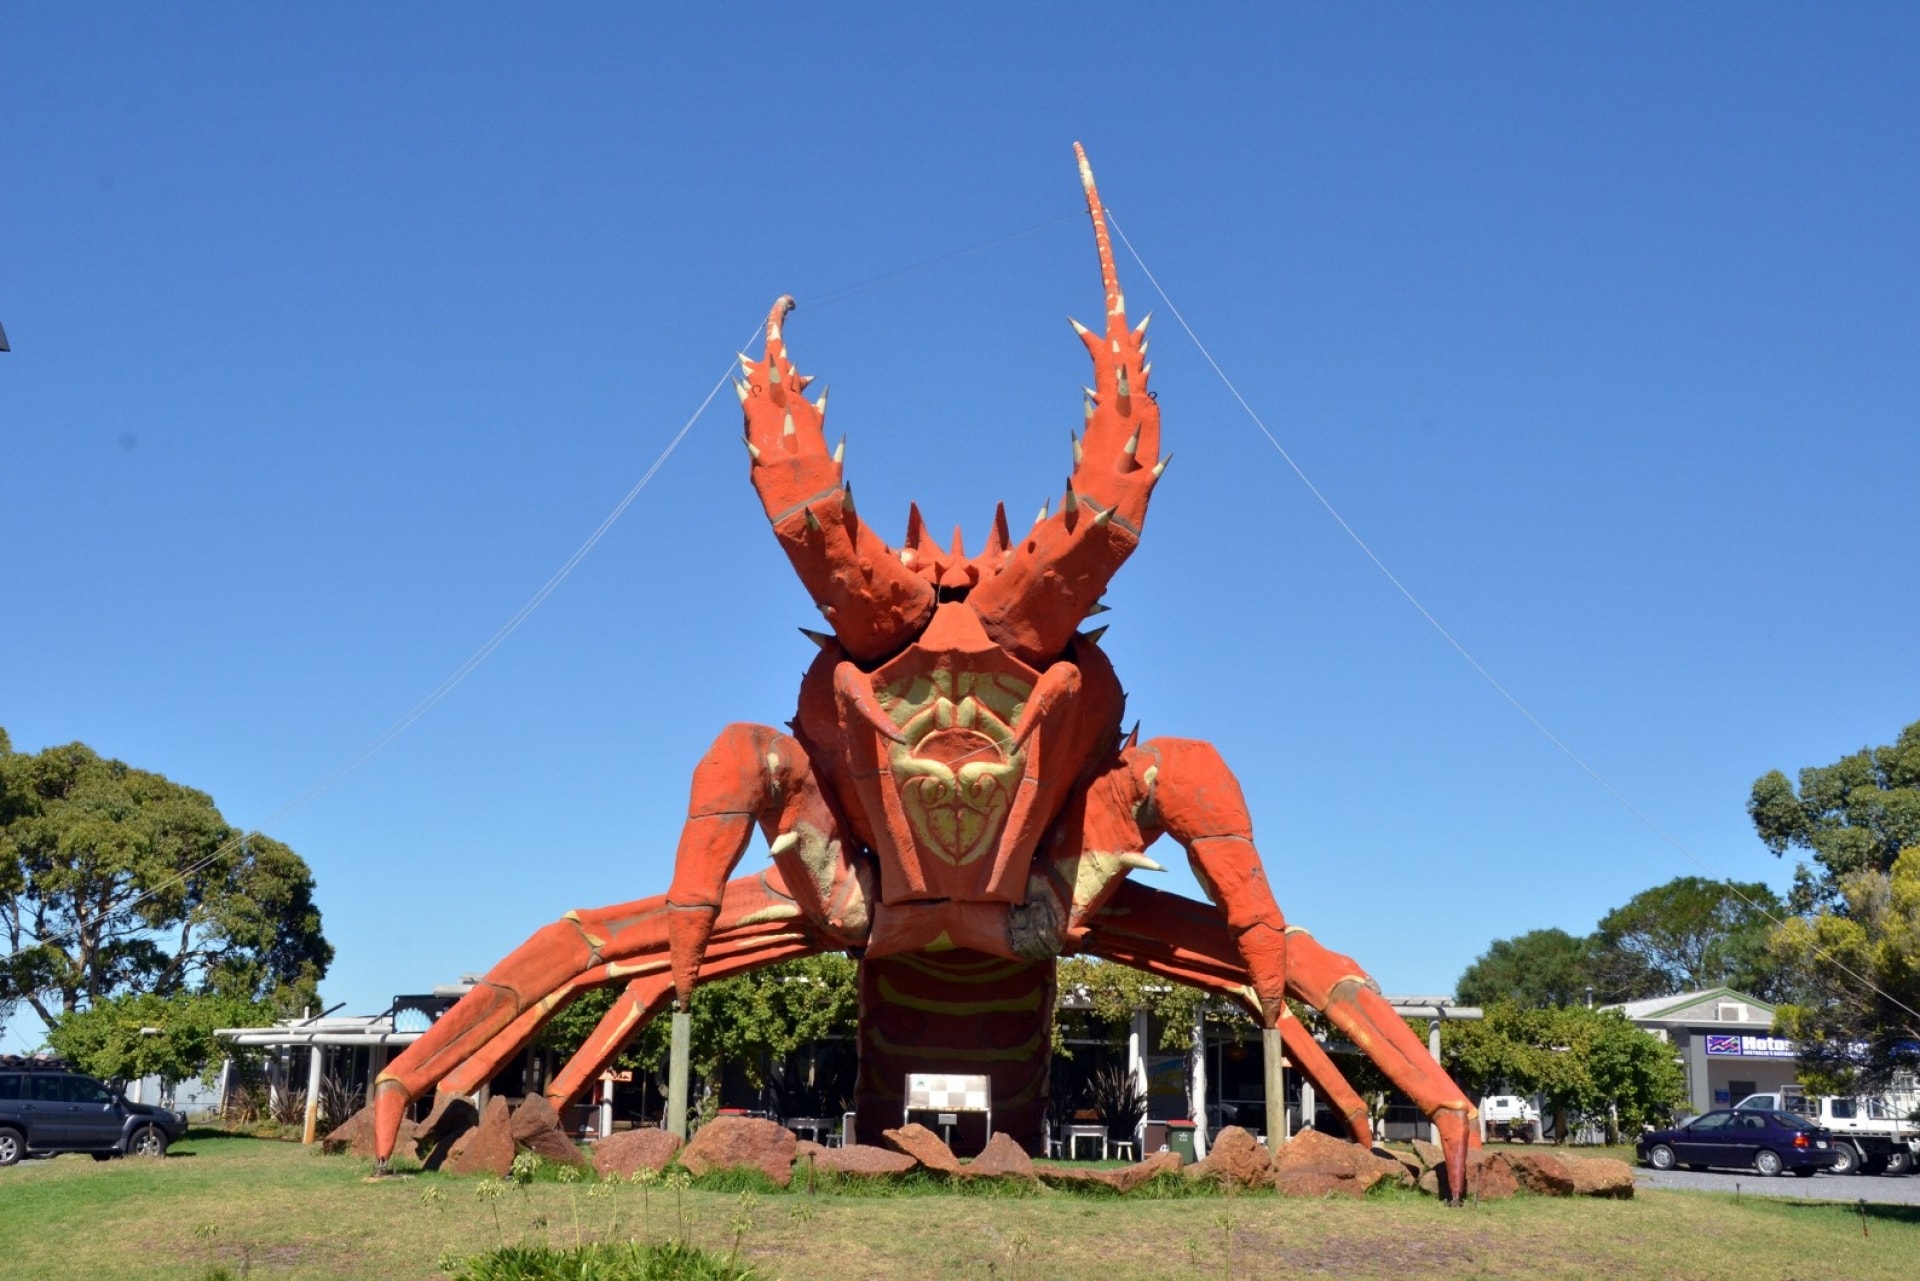 The Big Lobster, Kingston, South Australia © South Australian Tourism Commission